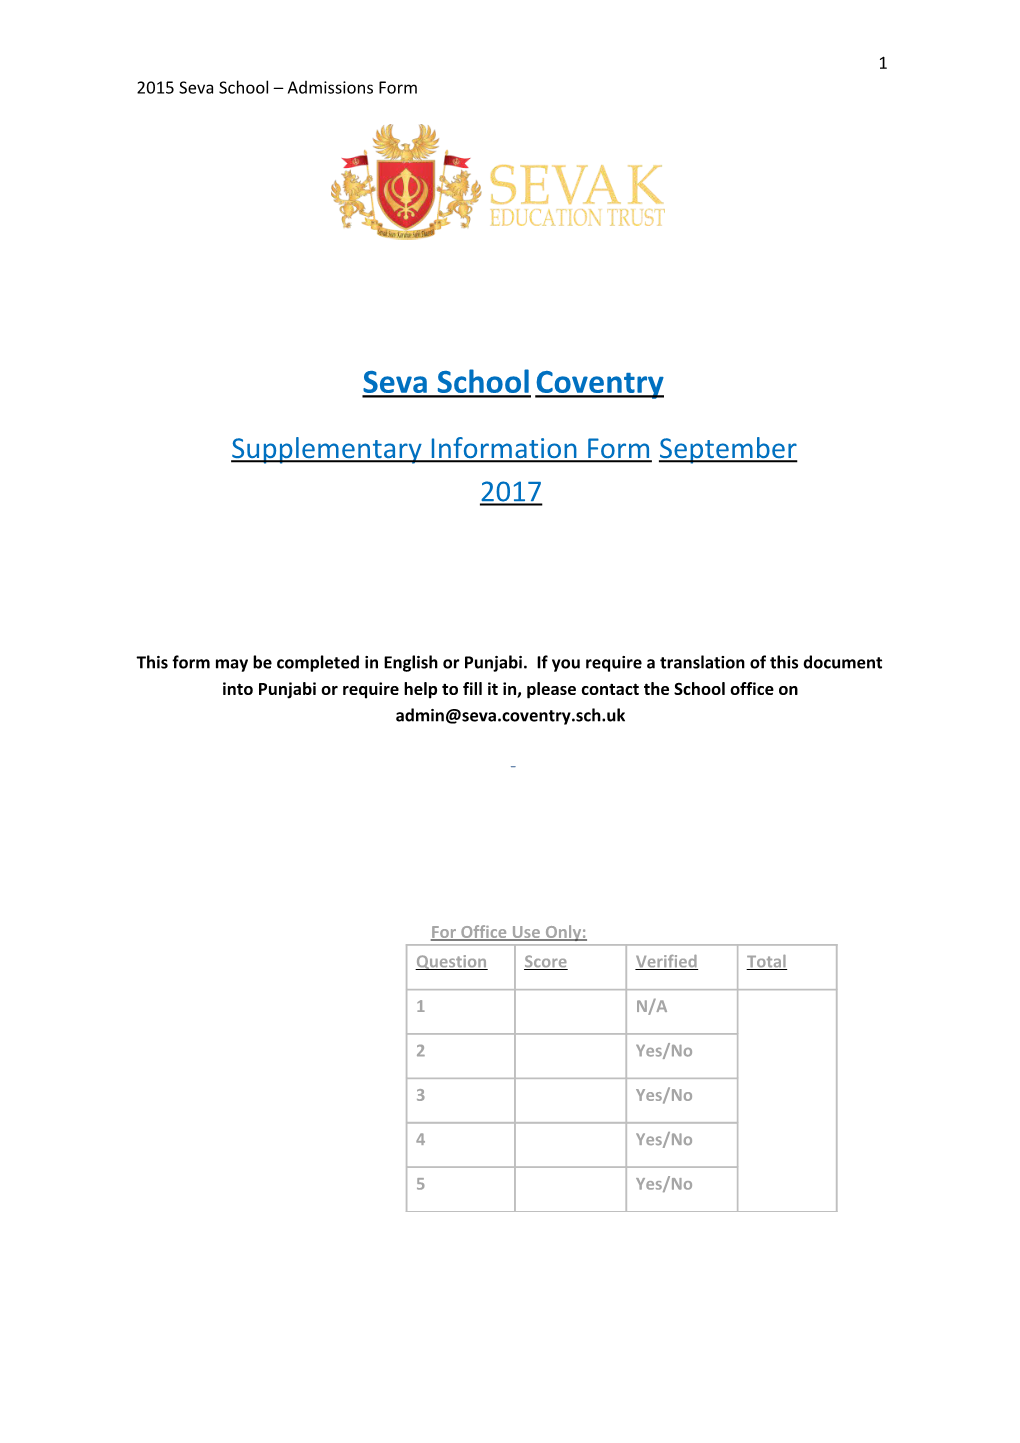 2015 Seva School Admissions Form